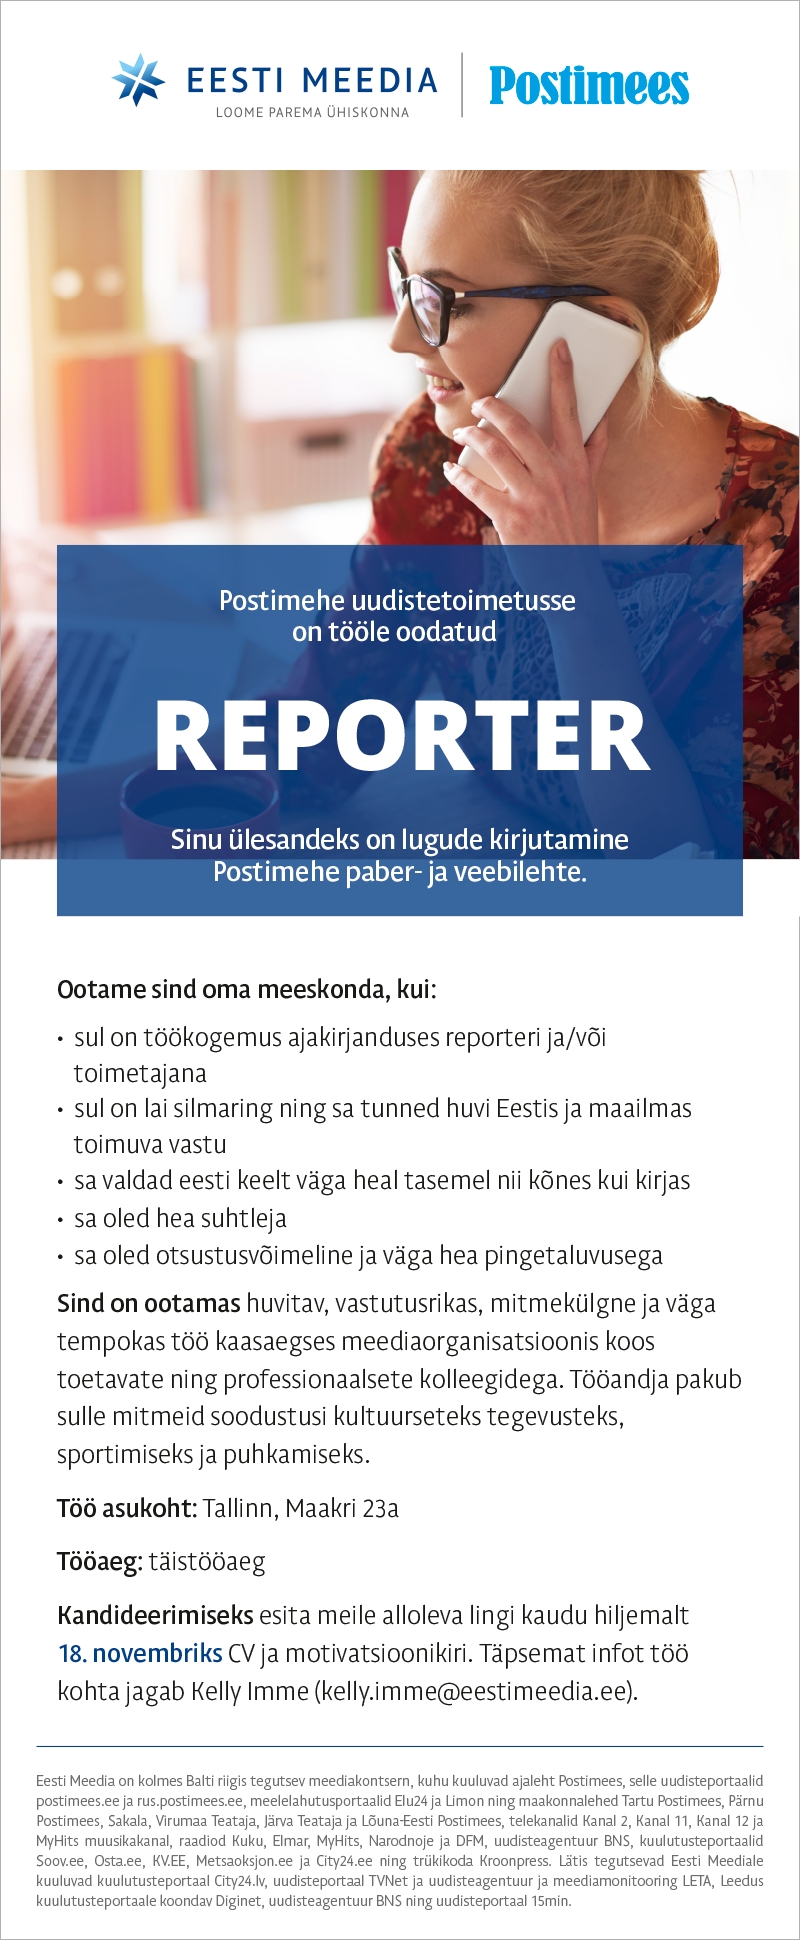 Eesti Meedia Postimehe reporter